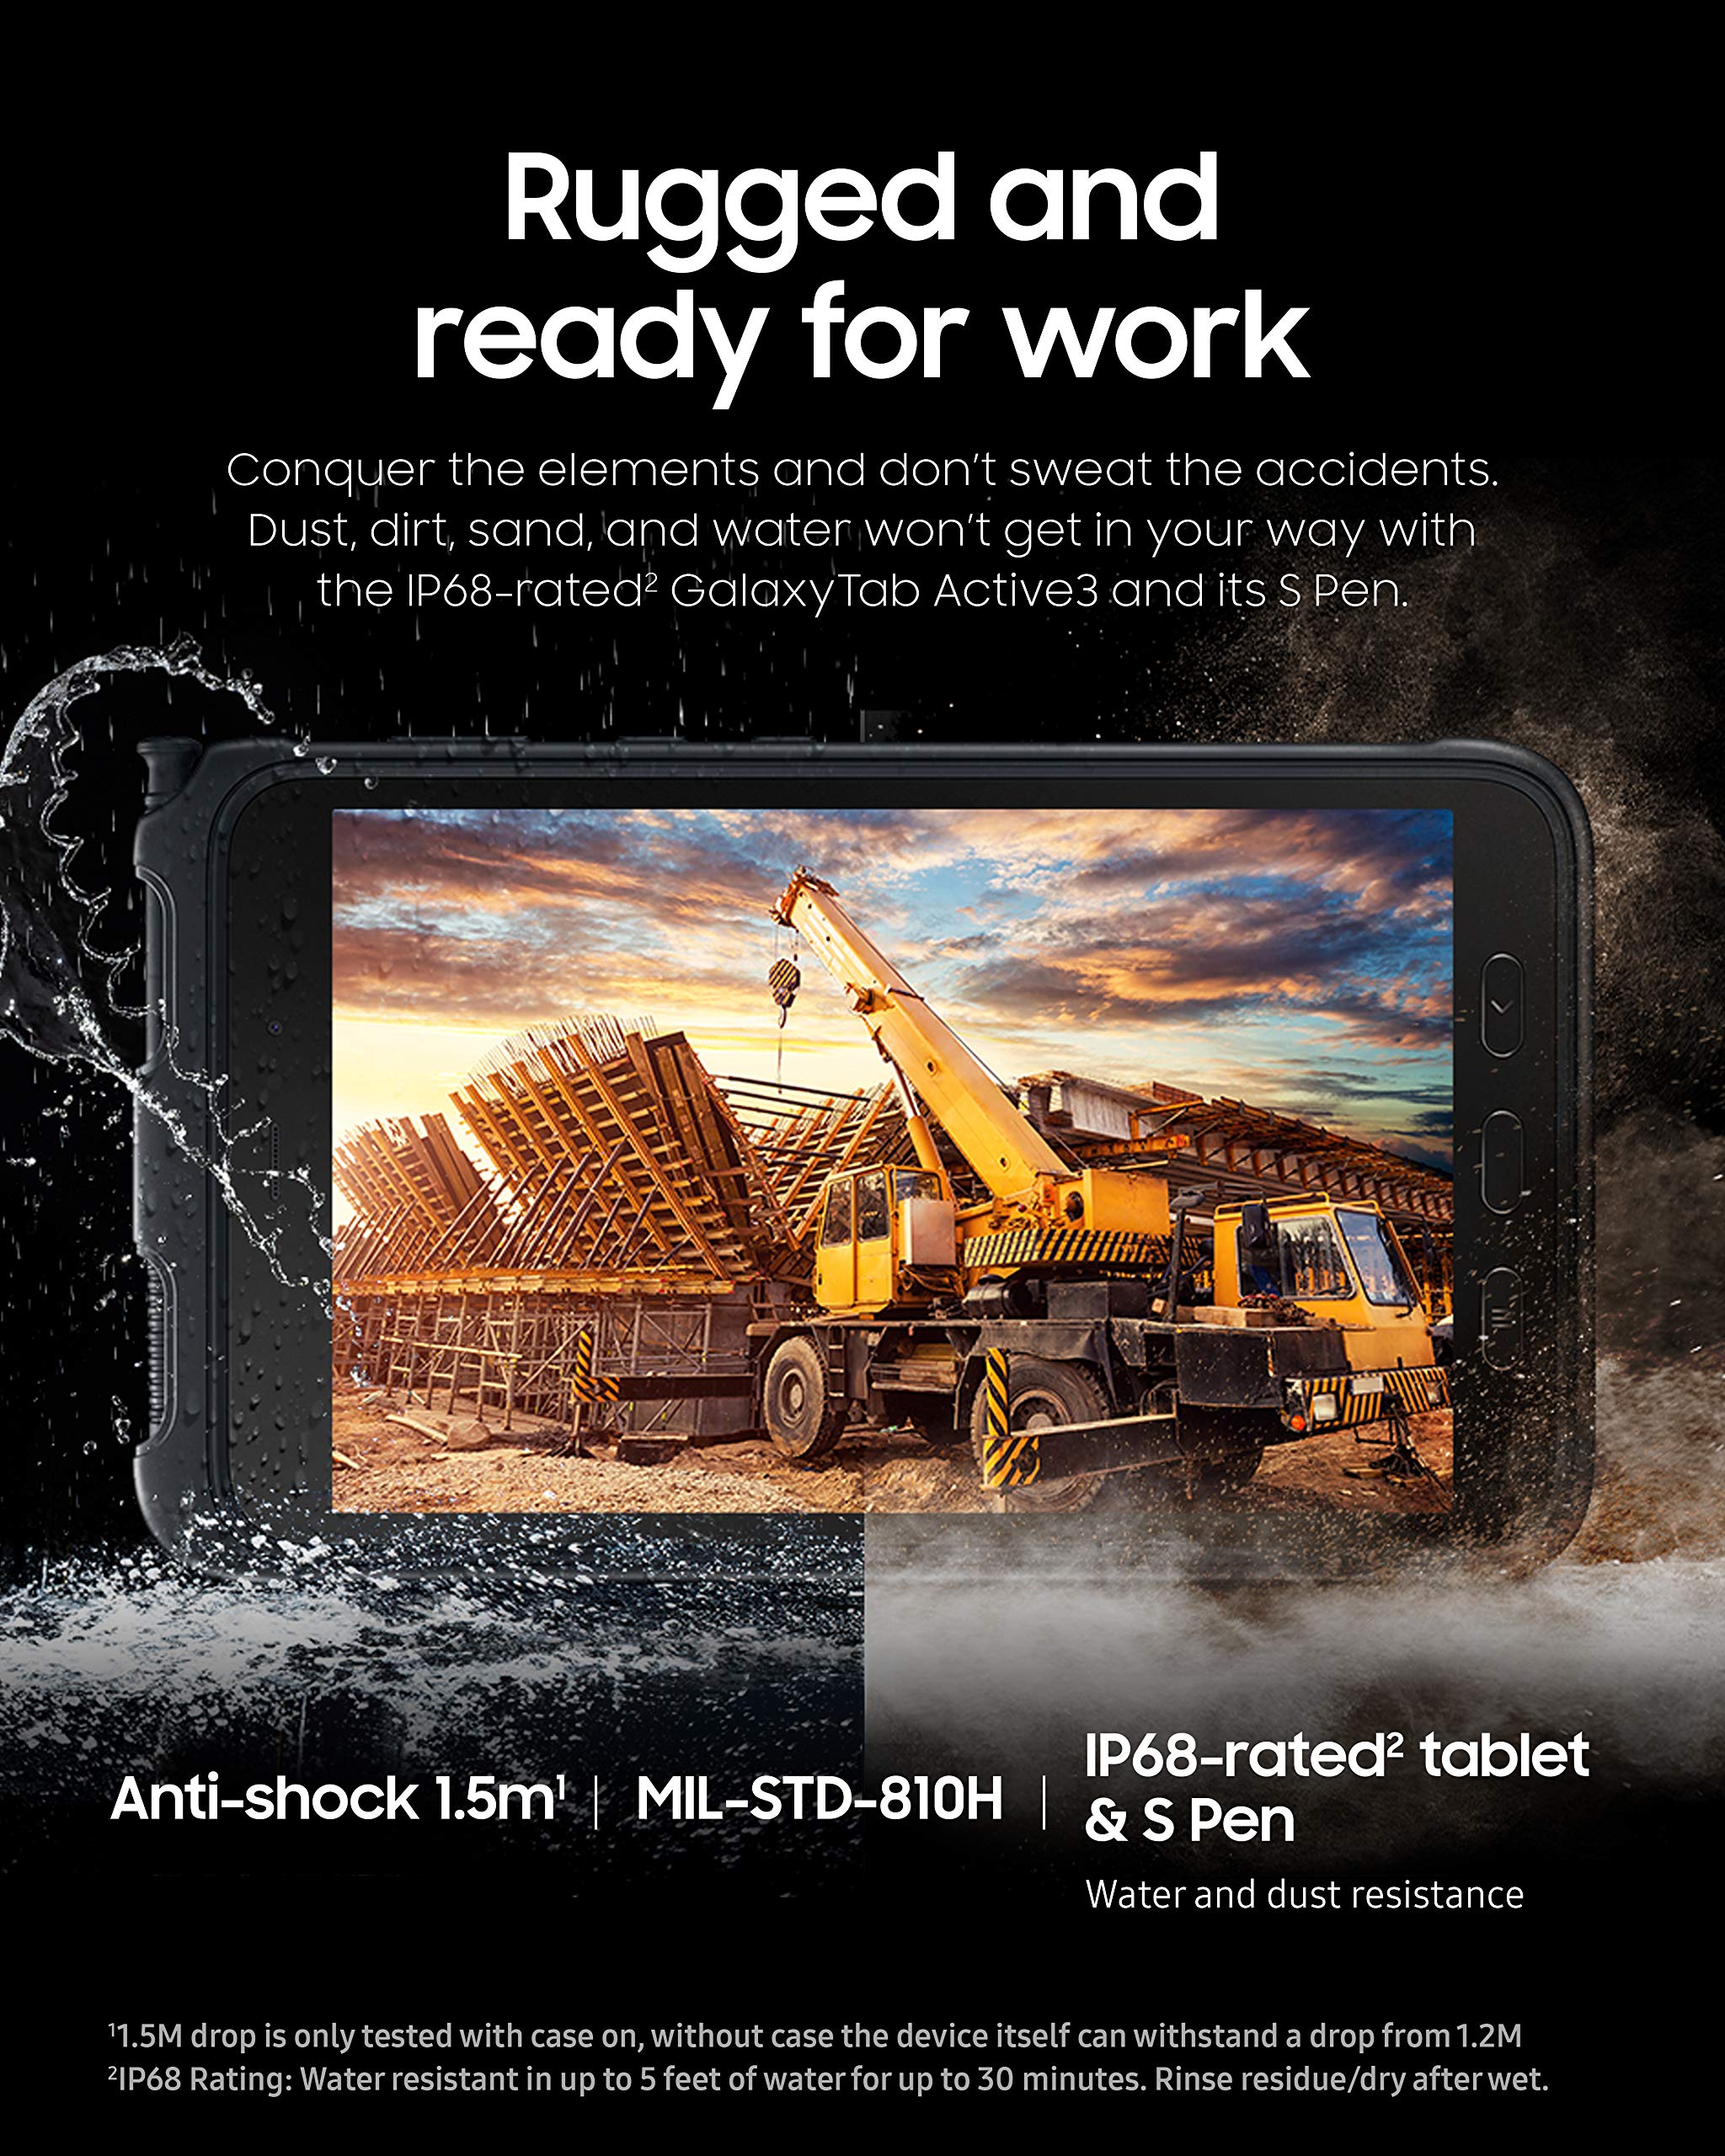 Samsung Galaxy Tab Active3 Enterprise Edition 8” Rugged Multi Purpose Tablet |64GB & WiFi | Biometric Security (SM-T570NZKAN20), Black